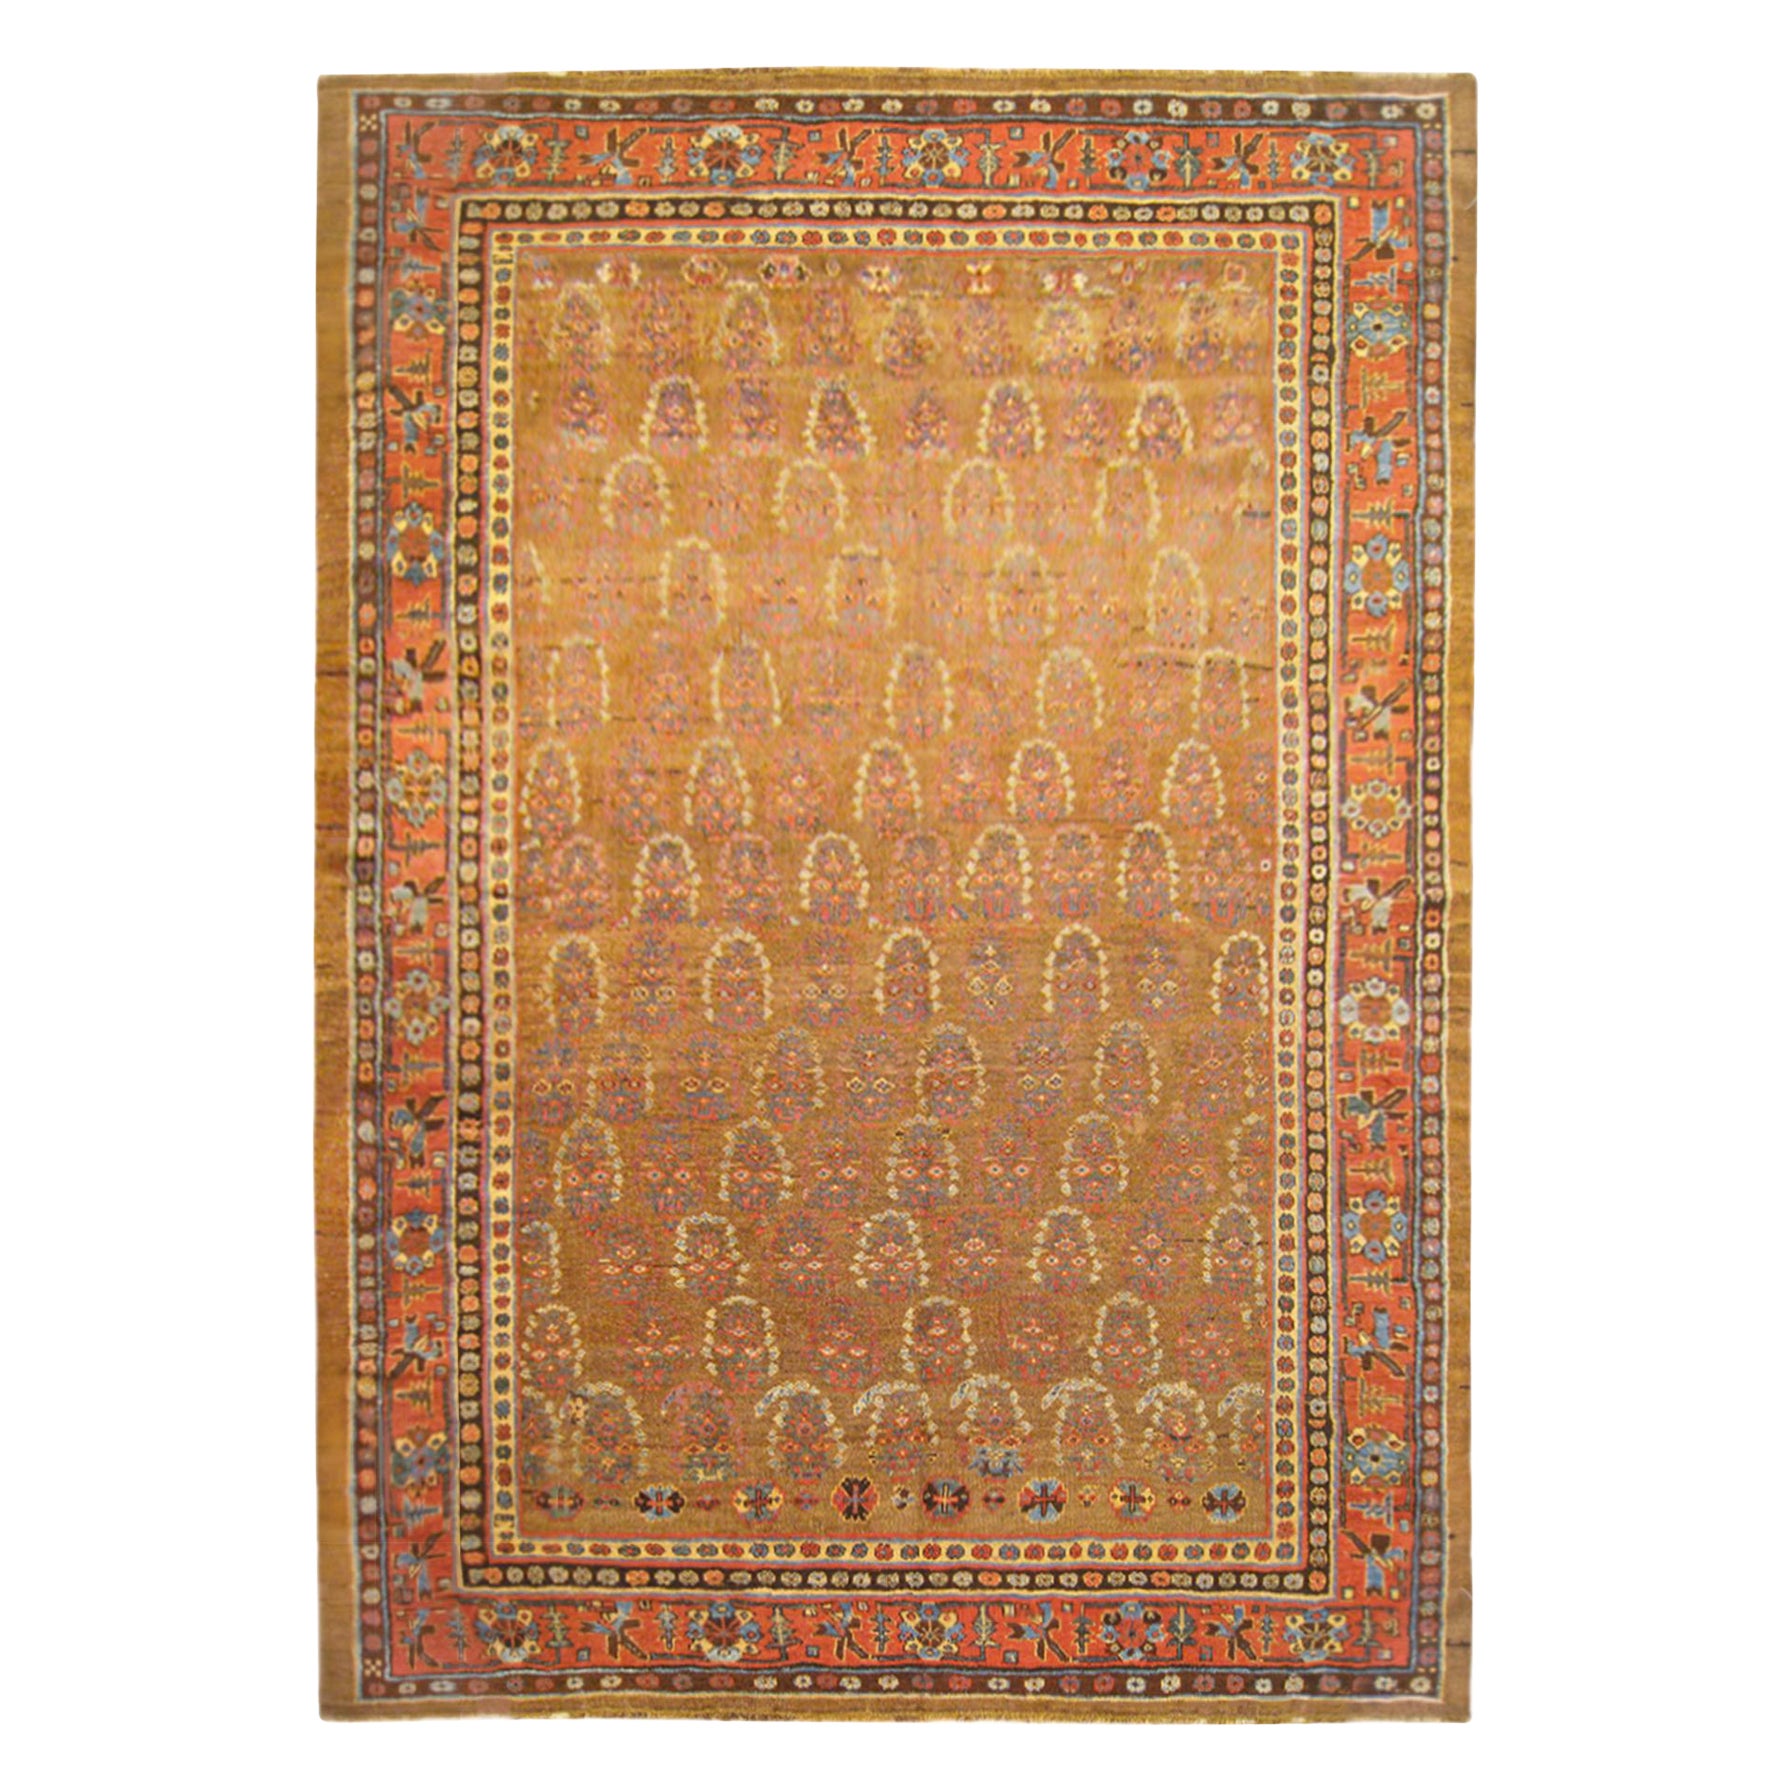 Antique Persian Bakshaish Oriental Carpet, in Large Size with Central Medallion